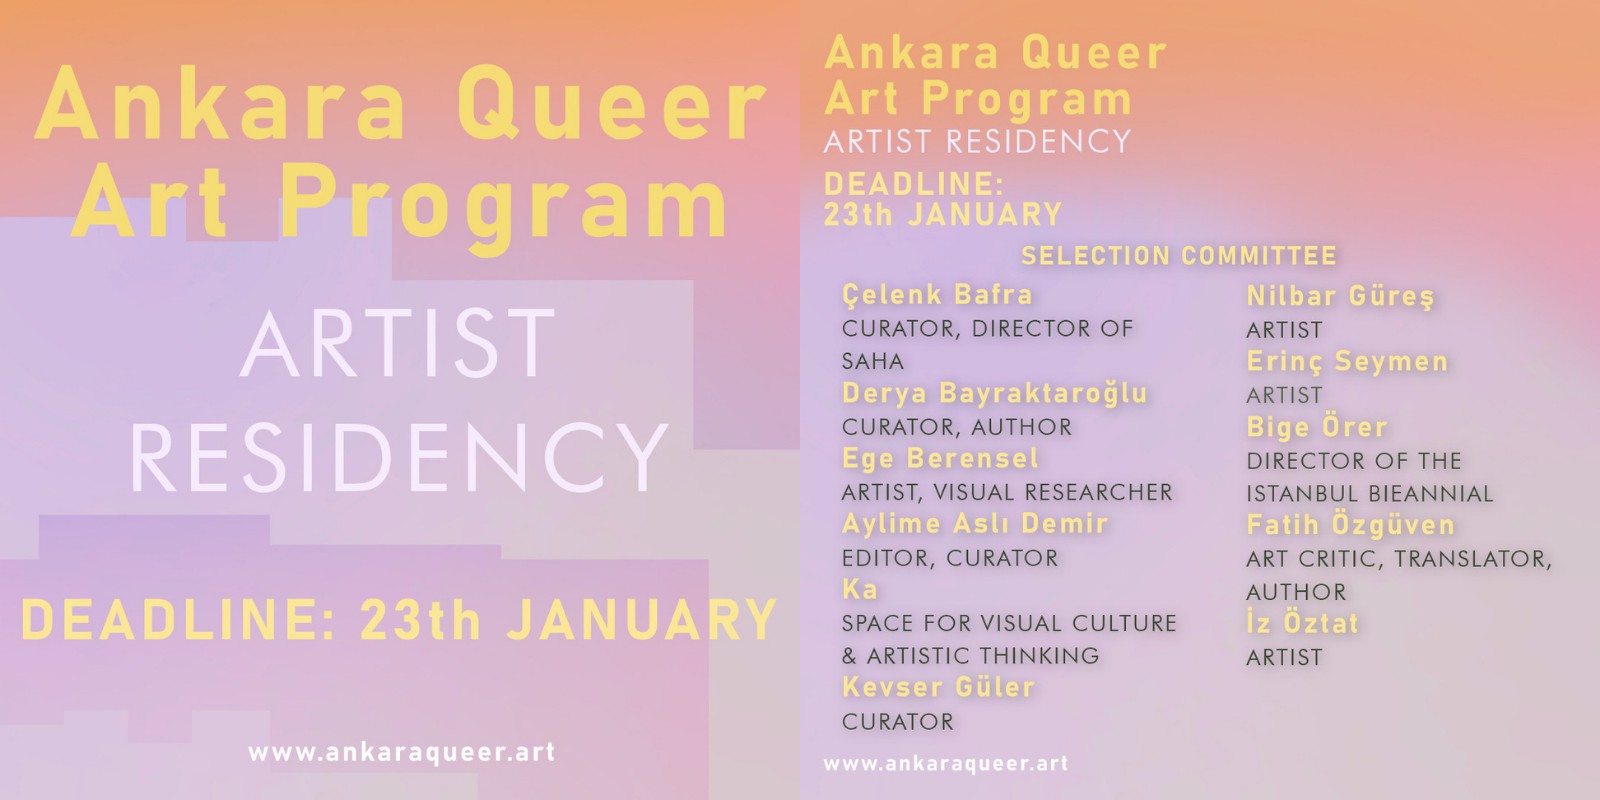 Call for applications: Ankara Queer Art Program - Artist Residency 2022 Kaos GL - News Portal for LGBTI+